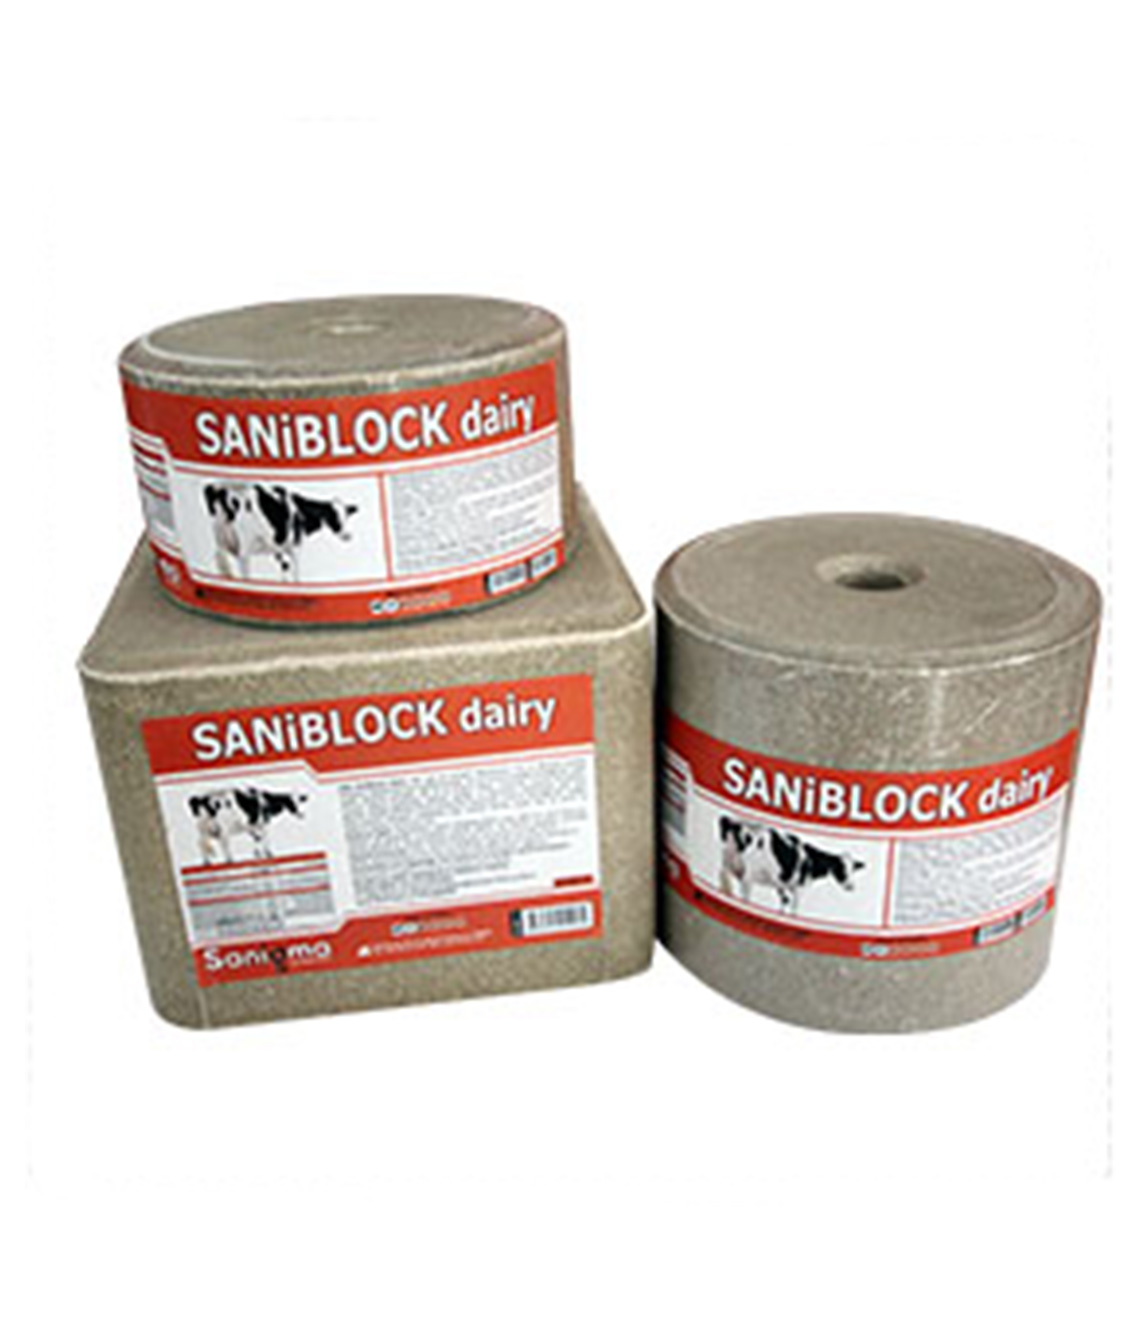 Sani Block Dairy